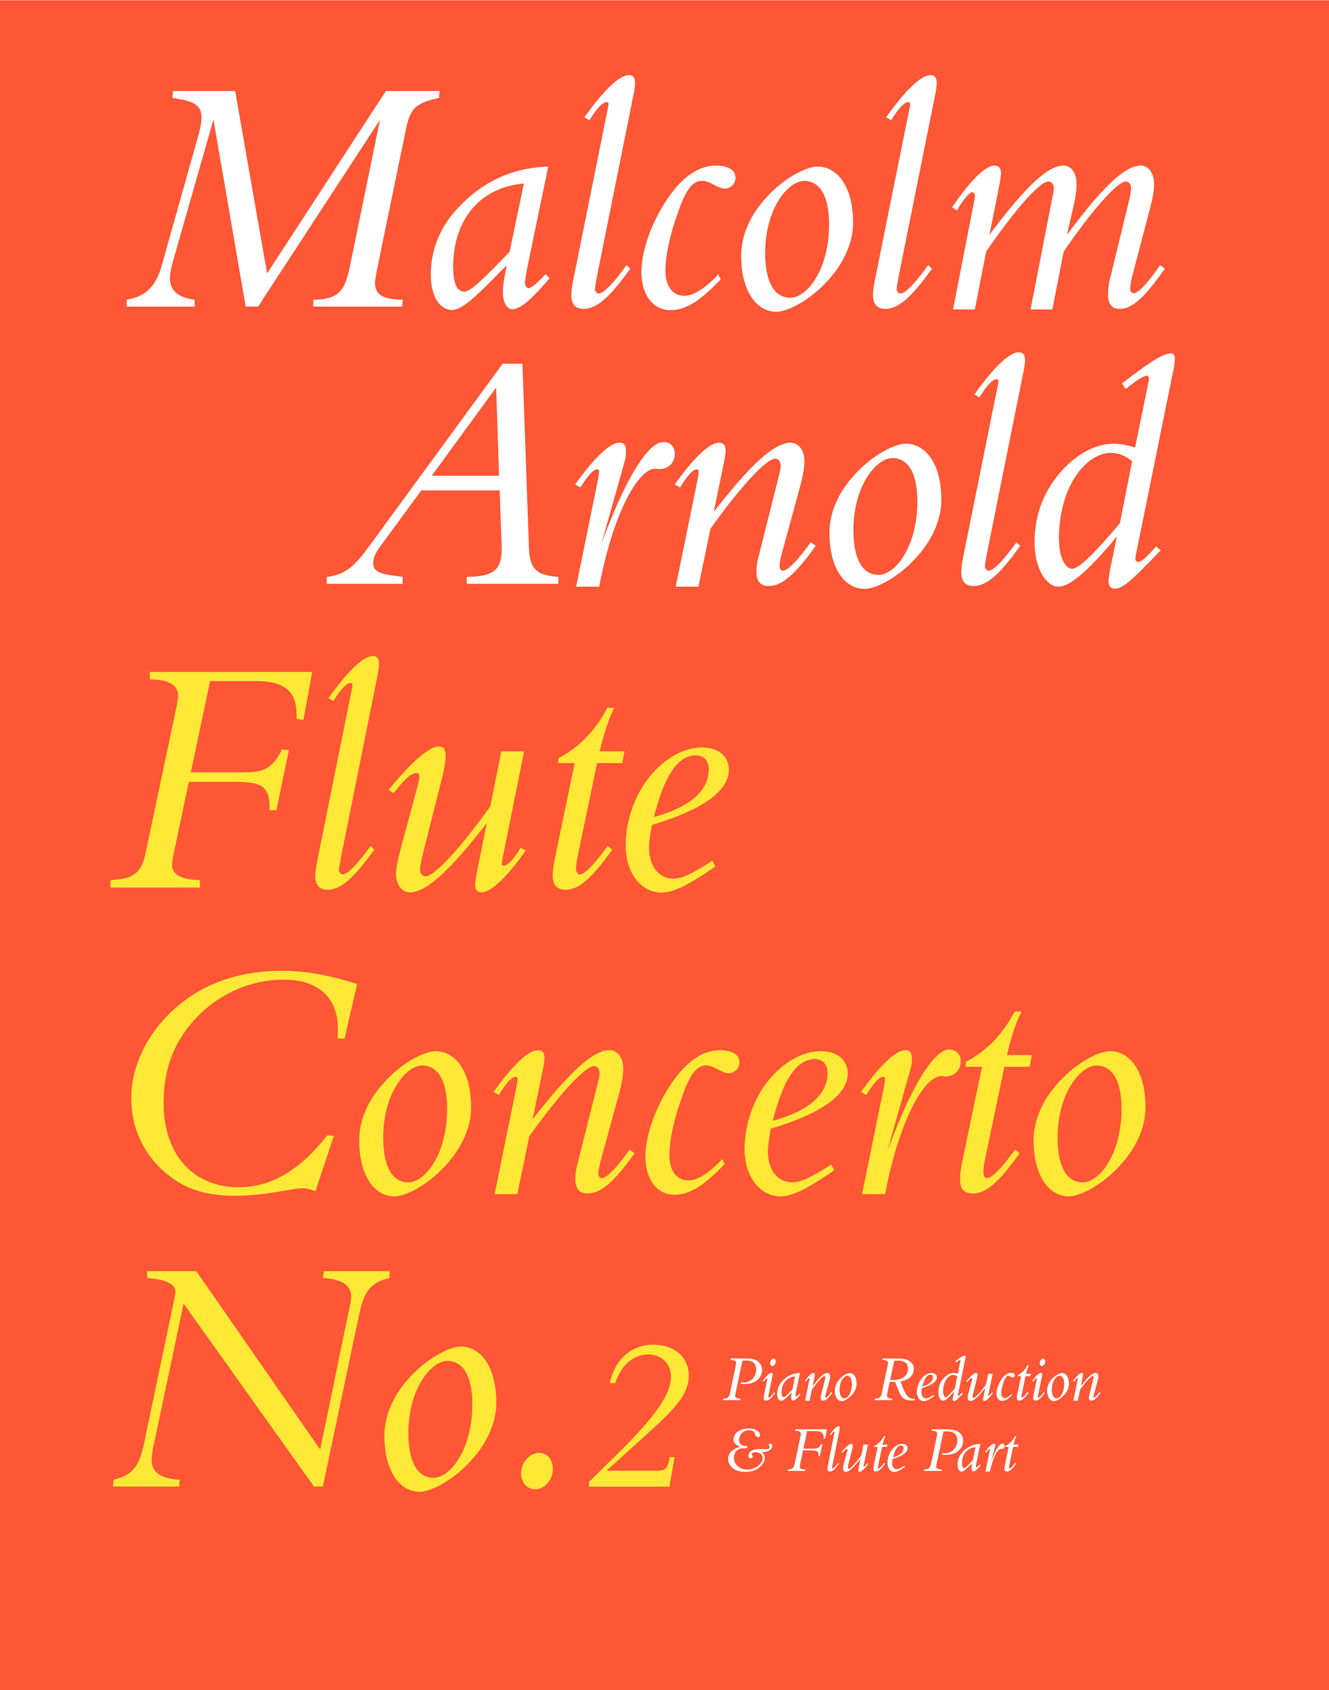 Flute Concerto No.2 (ARNOLD MALCOLM)